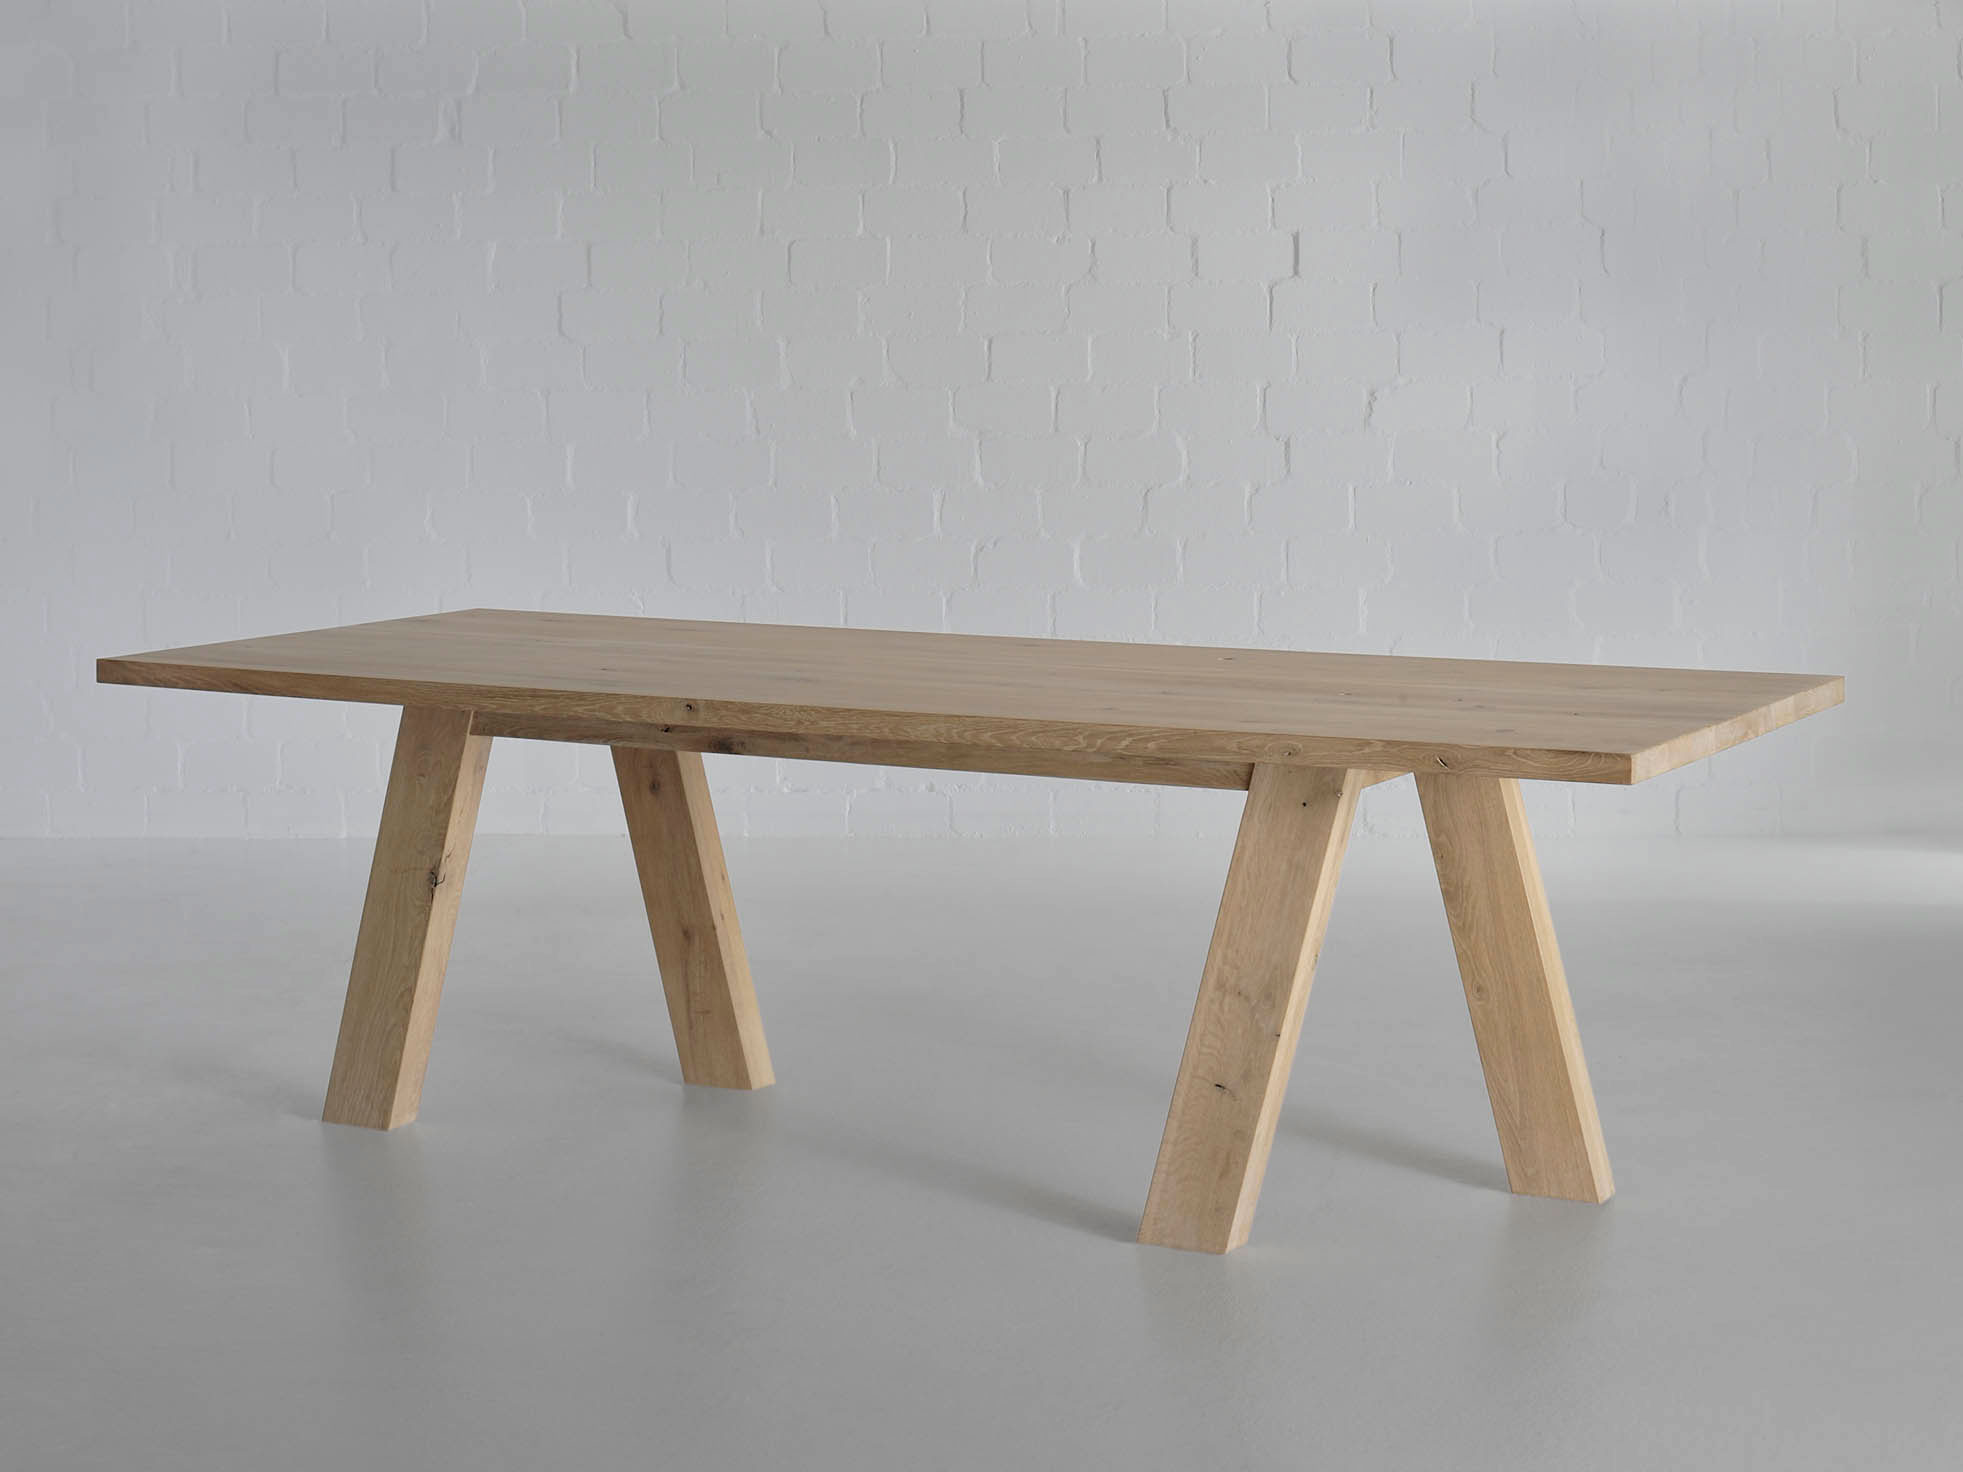 Unique Designer Table GO emv custom made in solid wood by vitamin design